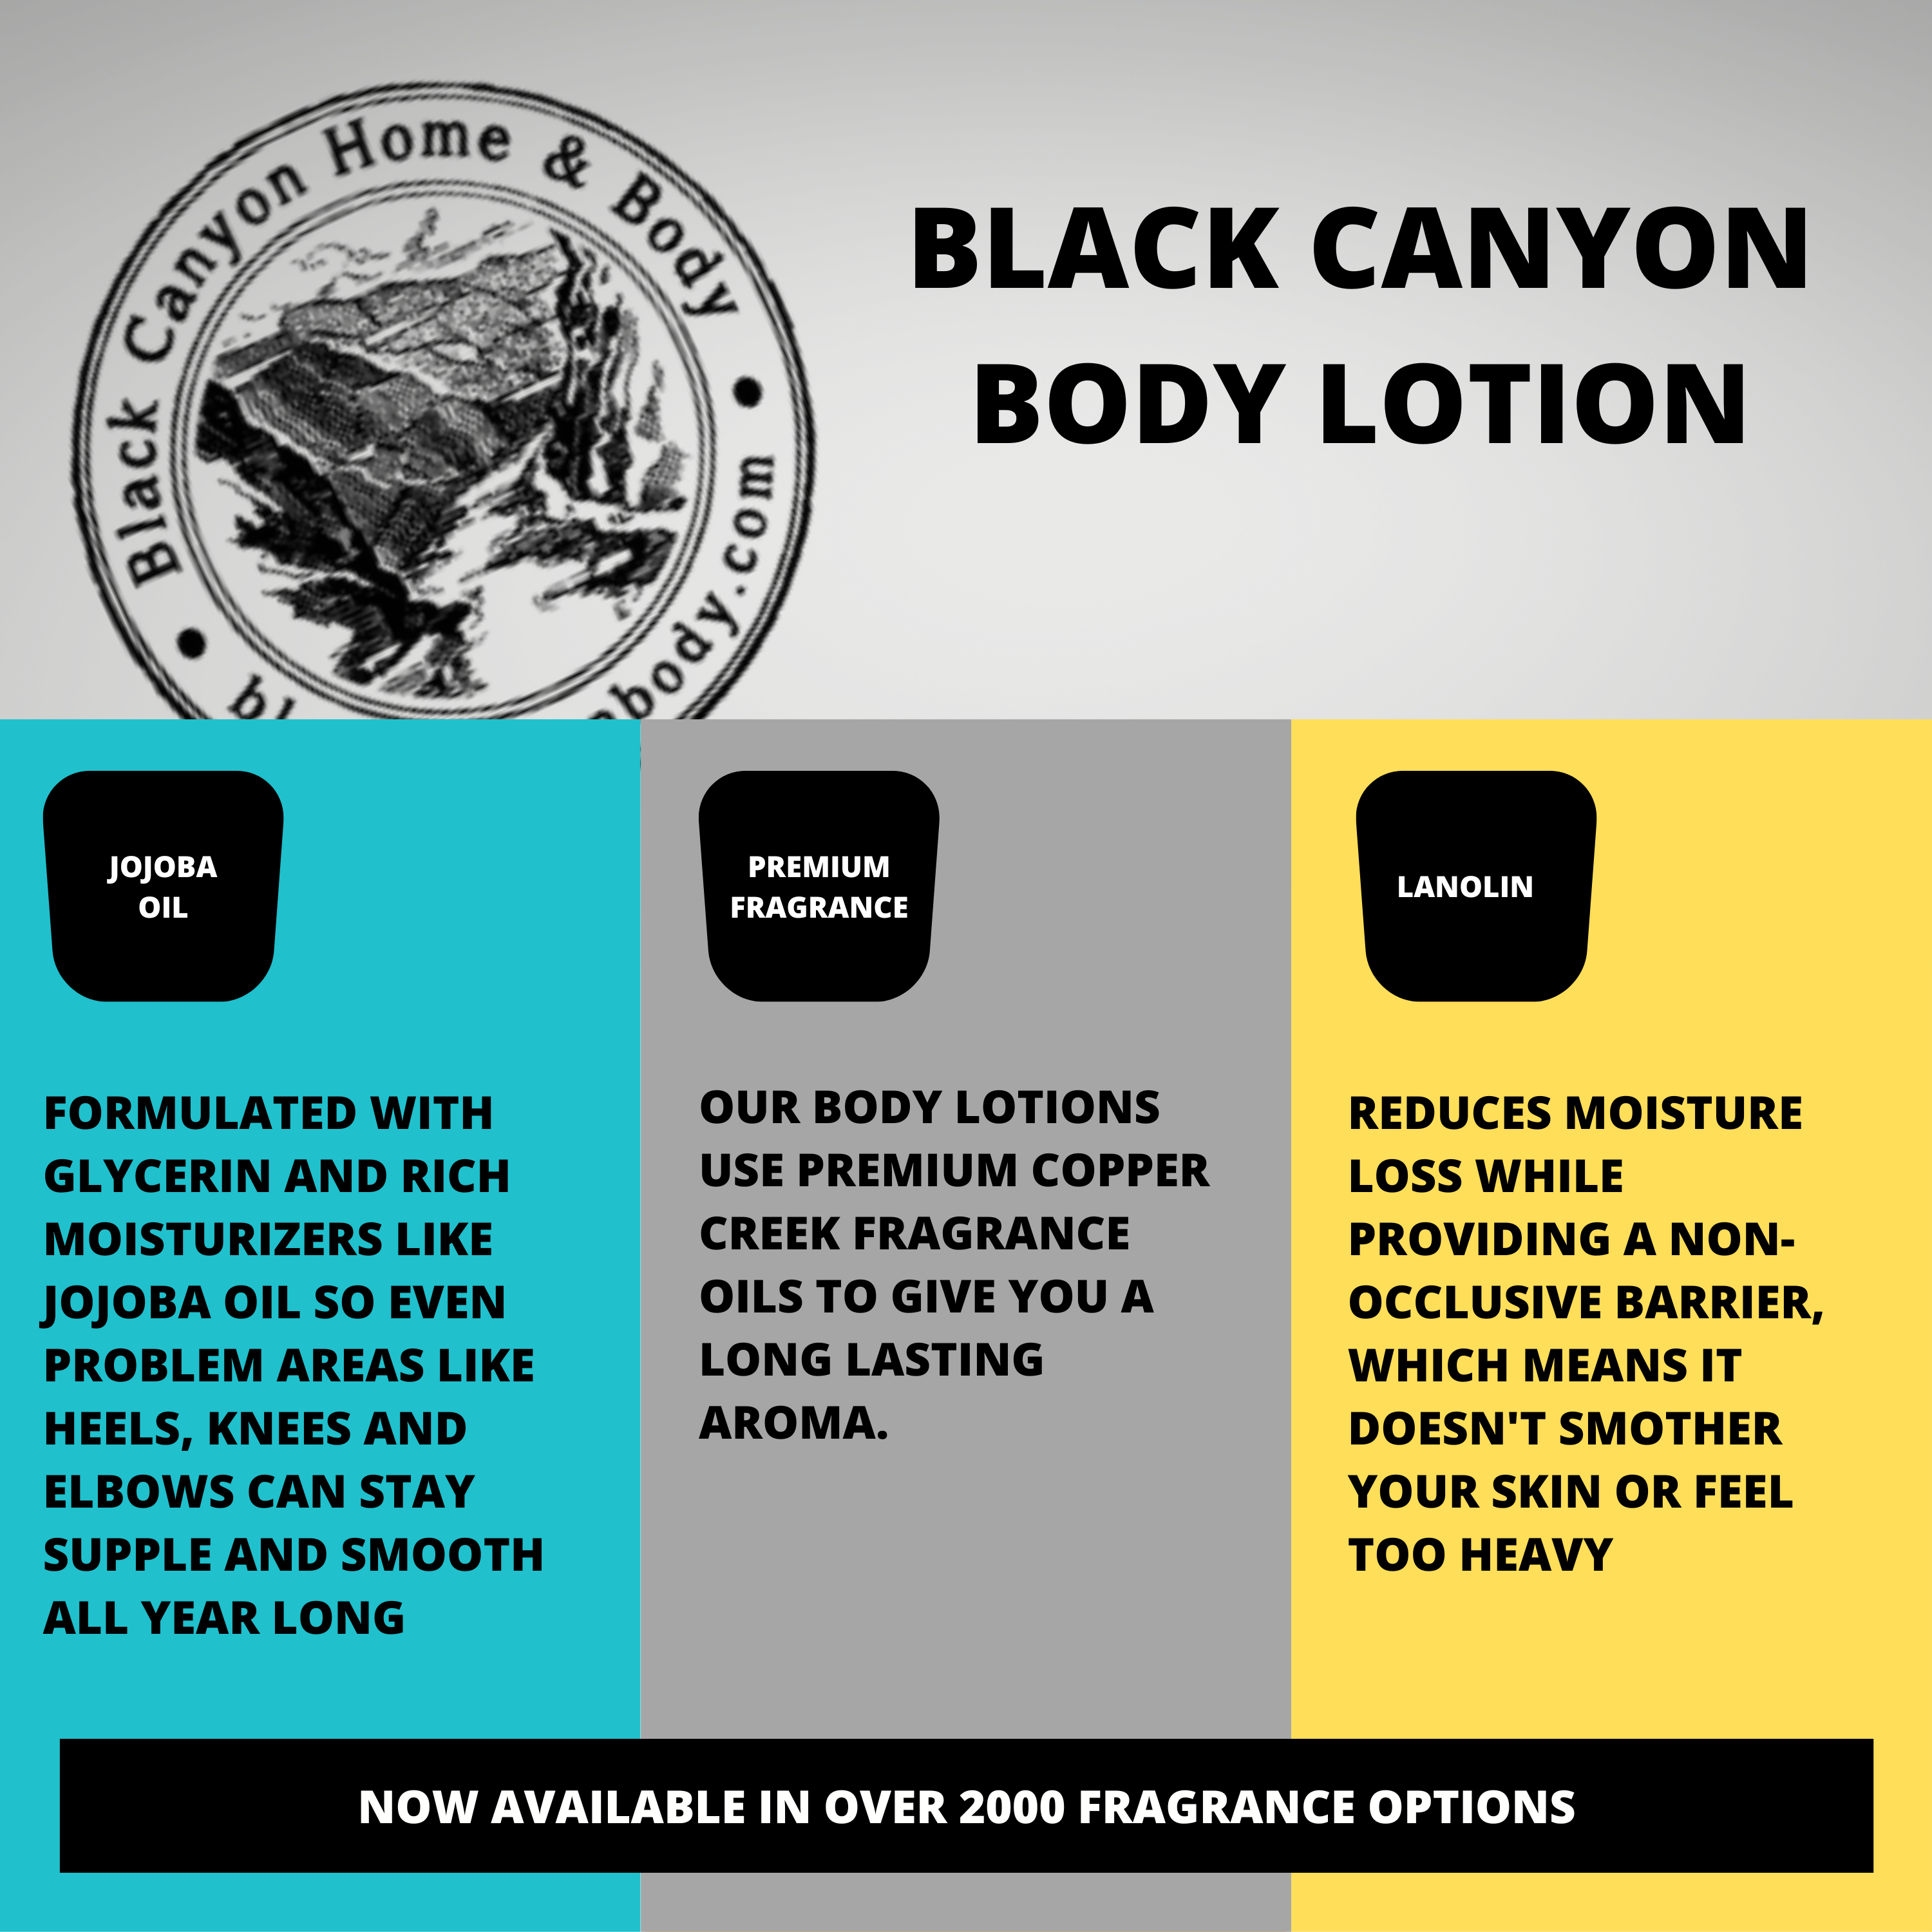 Black Canyon Apple Orange & Nutmeg Scented Luxury Body Lotion with Lanolin and Jojoba Oil